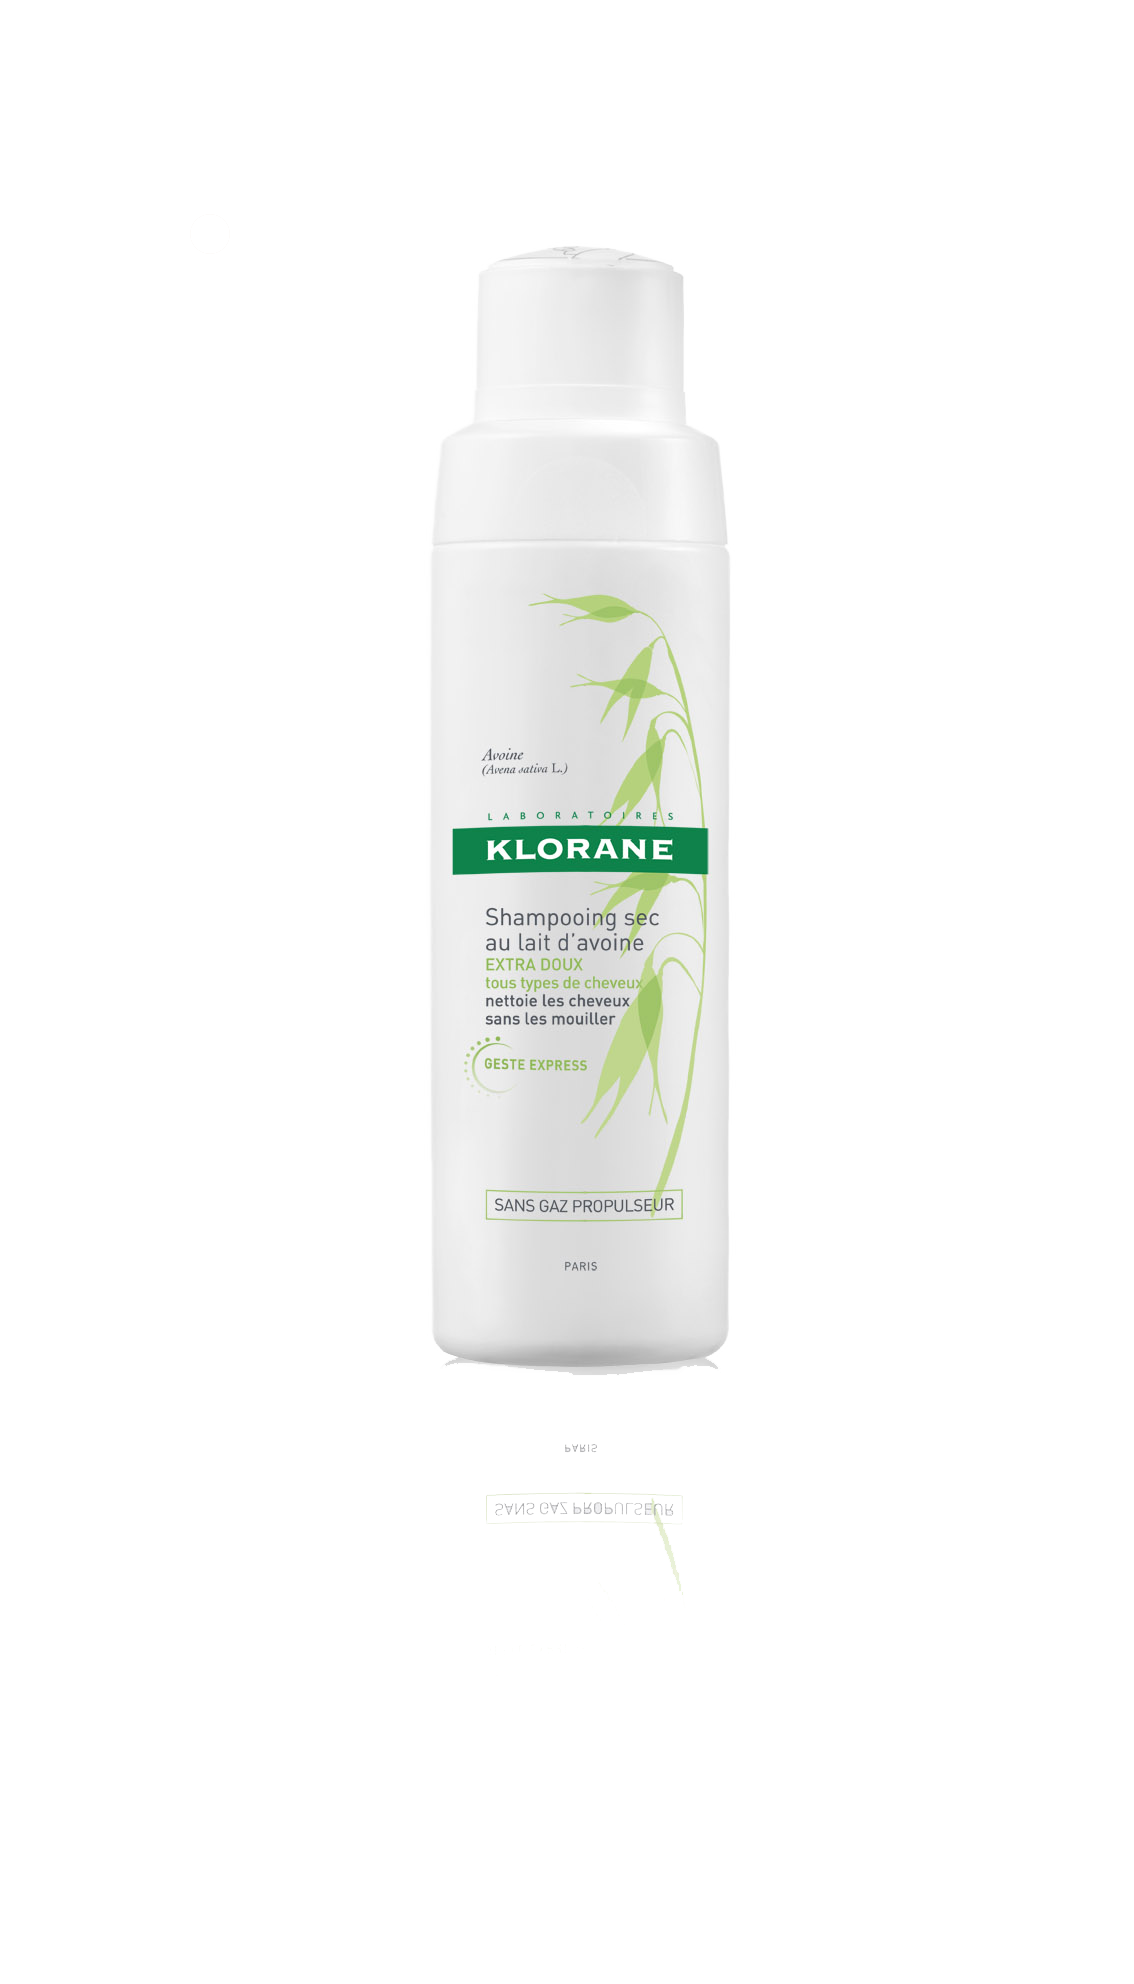 Klorane dry shampoo oat milk non aerosol 50g